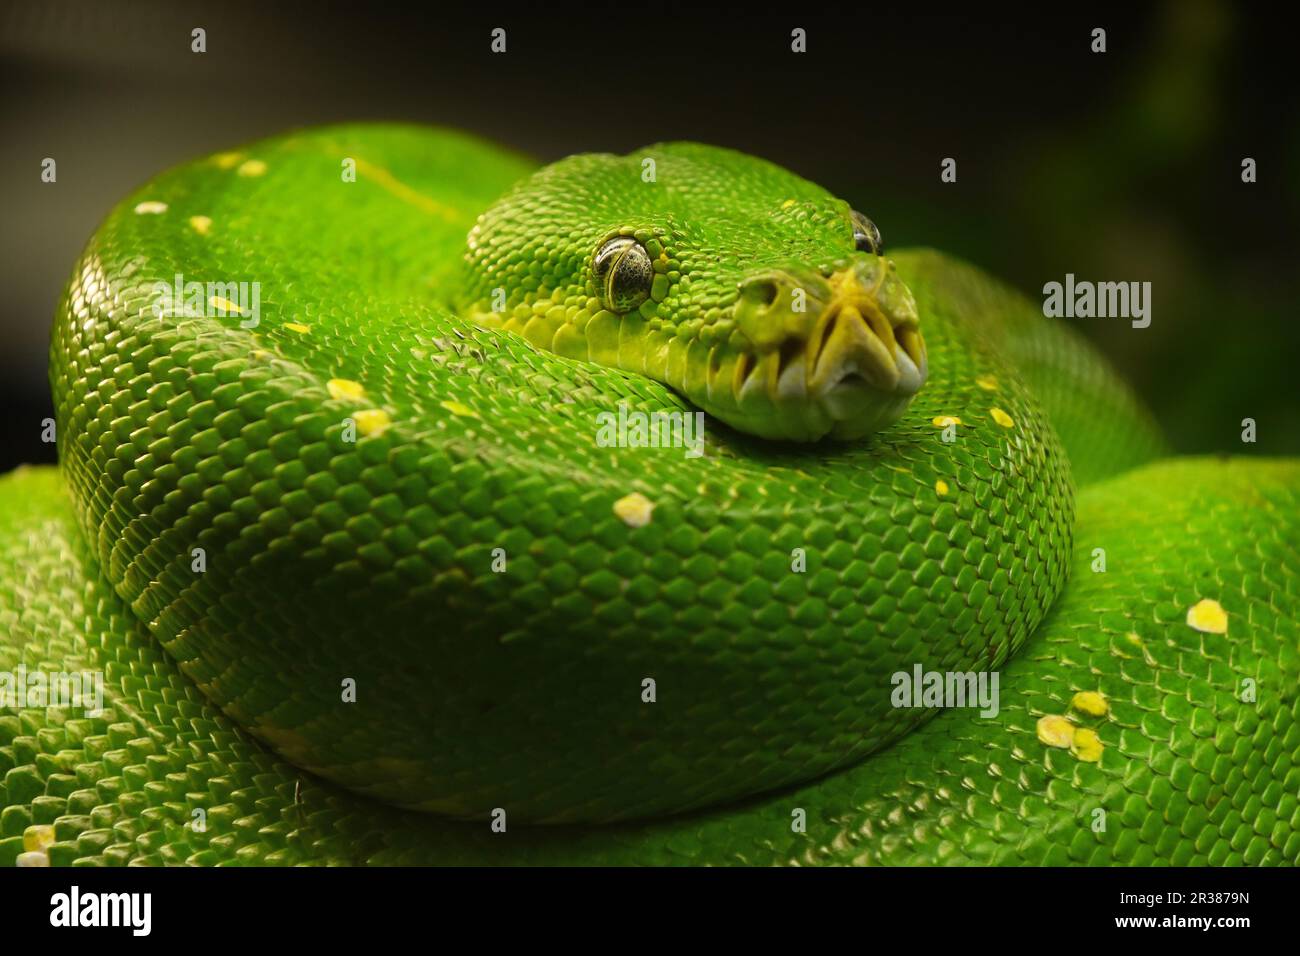 Green Tree python (Morelia viridis) close up Banque D'Images